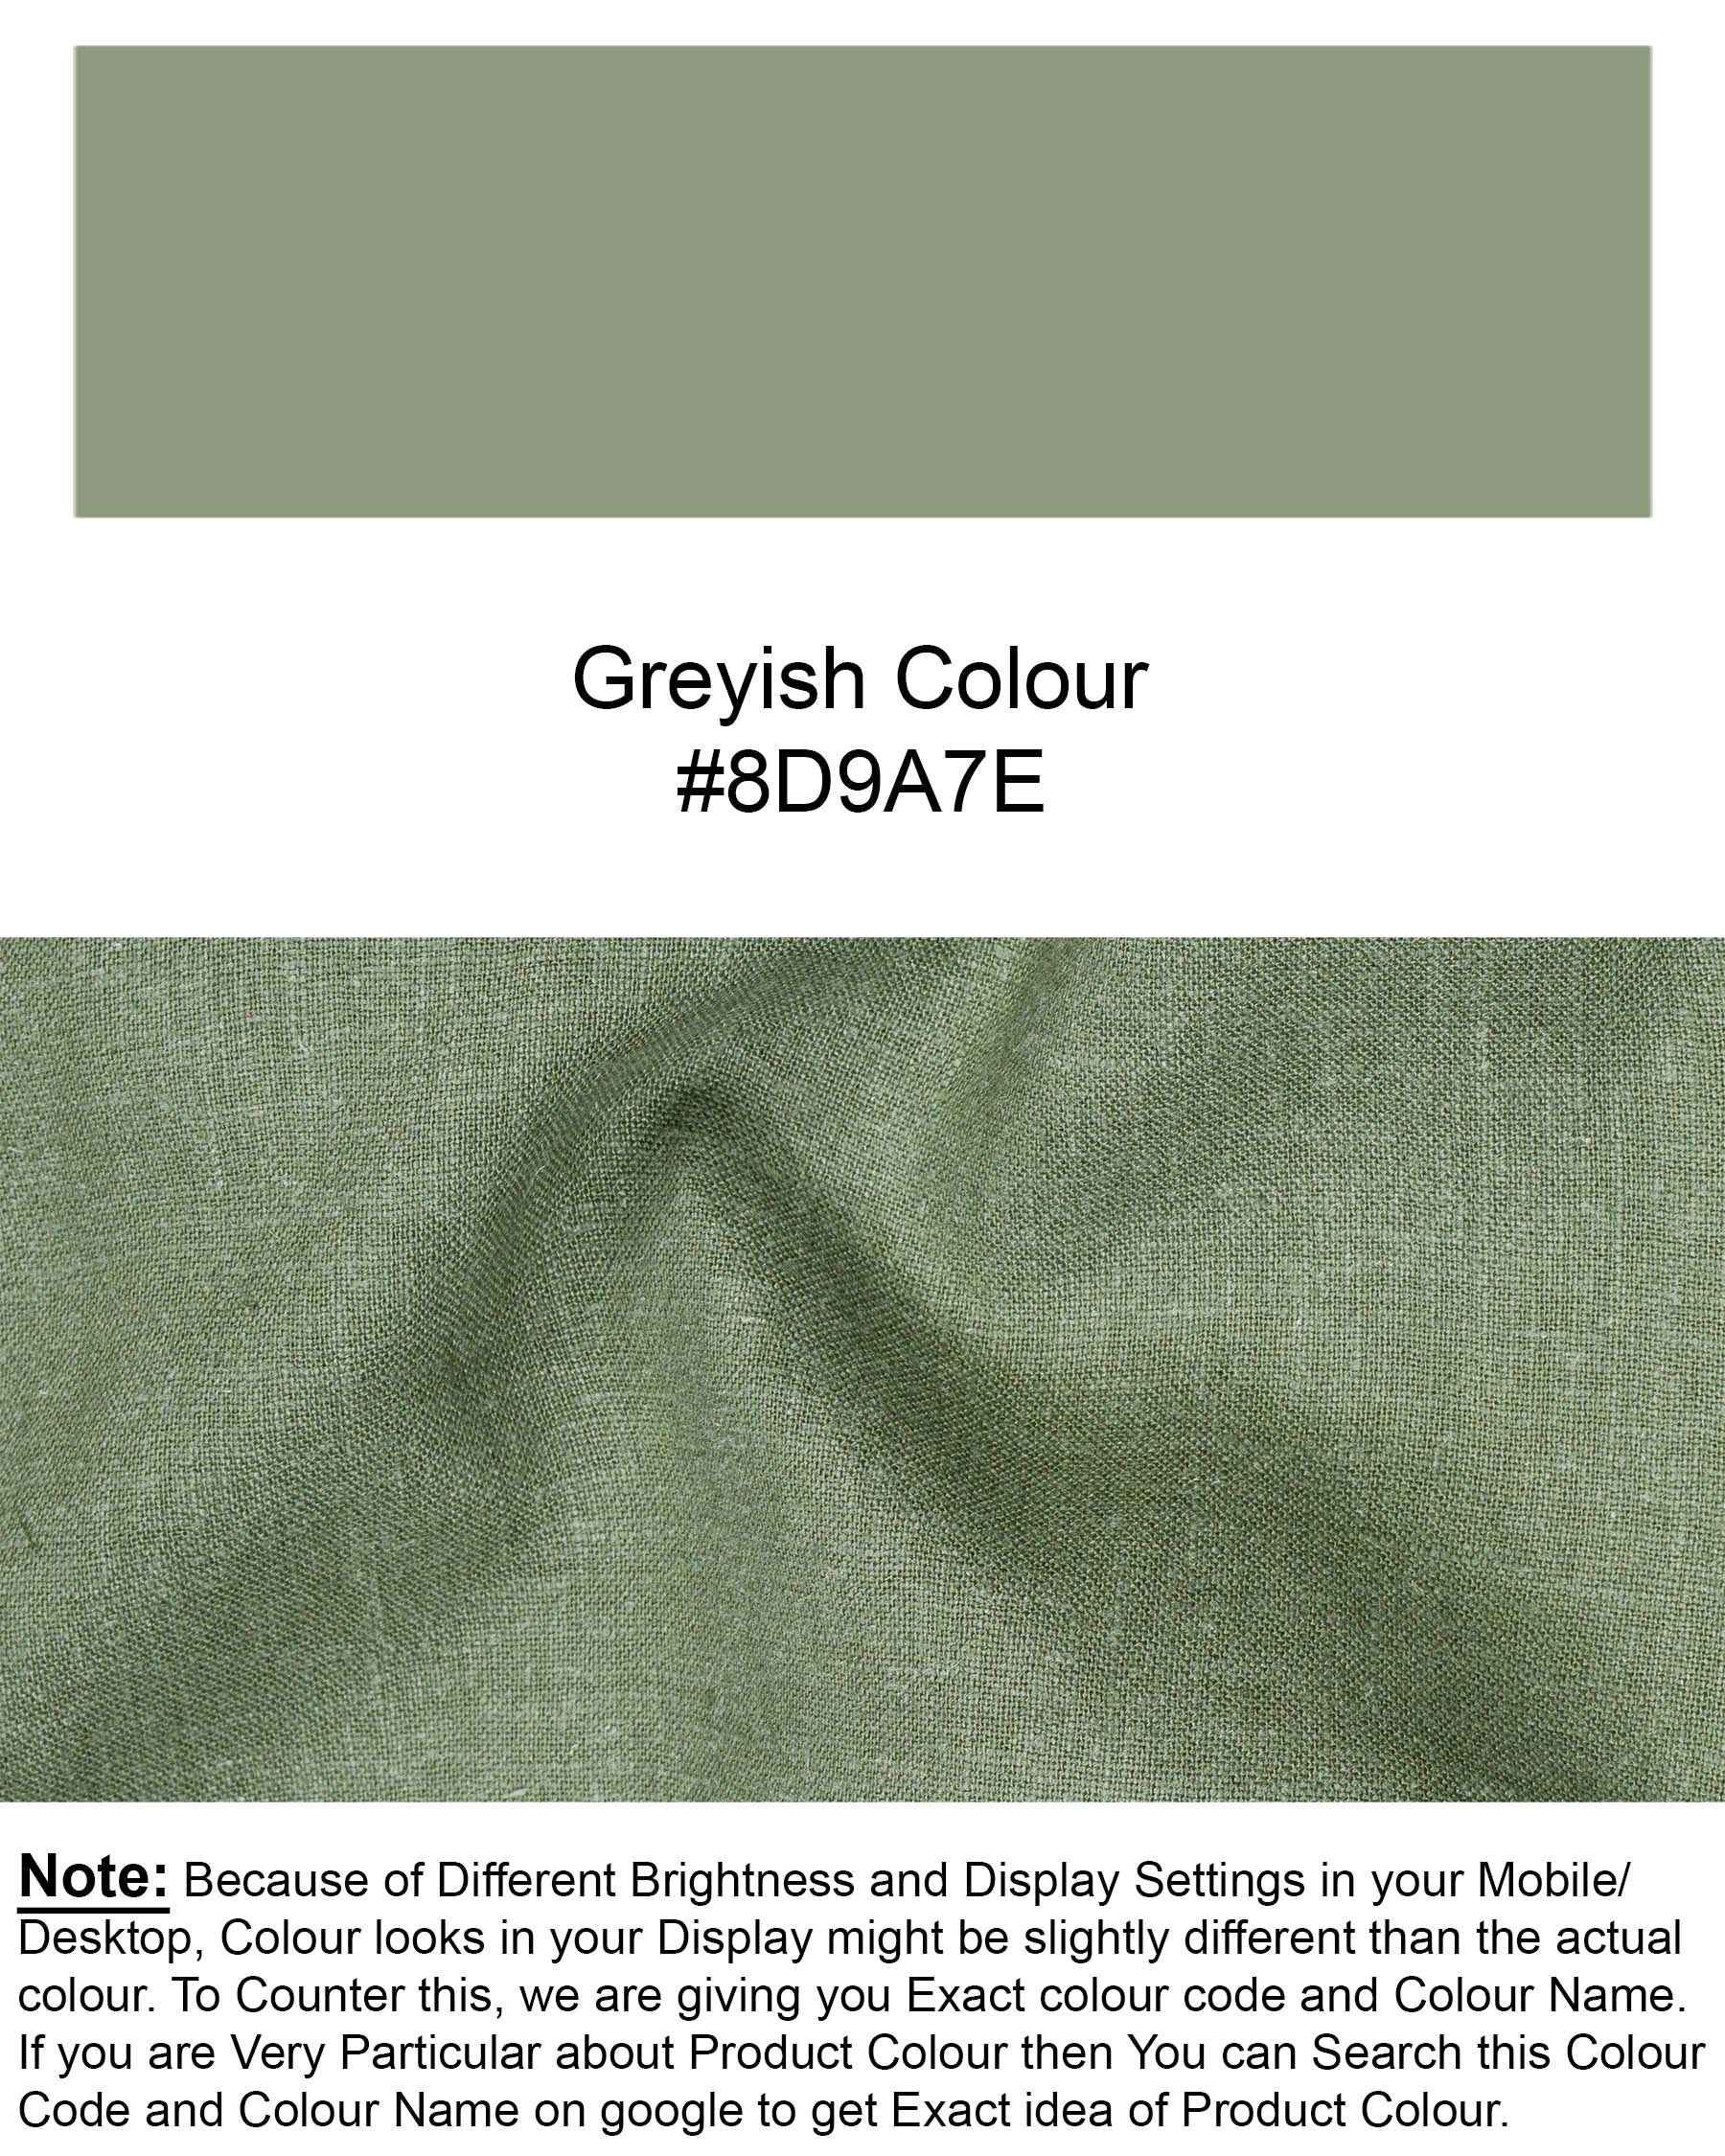 Greyish Green Premium Tencel Shirt 7137-38, 7137-H-38, 7137-39, 7137-H-39, 7137-40, 7137-H-40, 7137-42, 7137-H-42, 7137-44, 7137-H-44, 7137-46, 7137-H-46, 7137-48, 7137-H-48, 7137-50, 7137-H-50, 7137-52, 7137-H-52